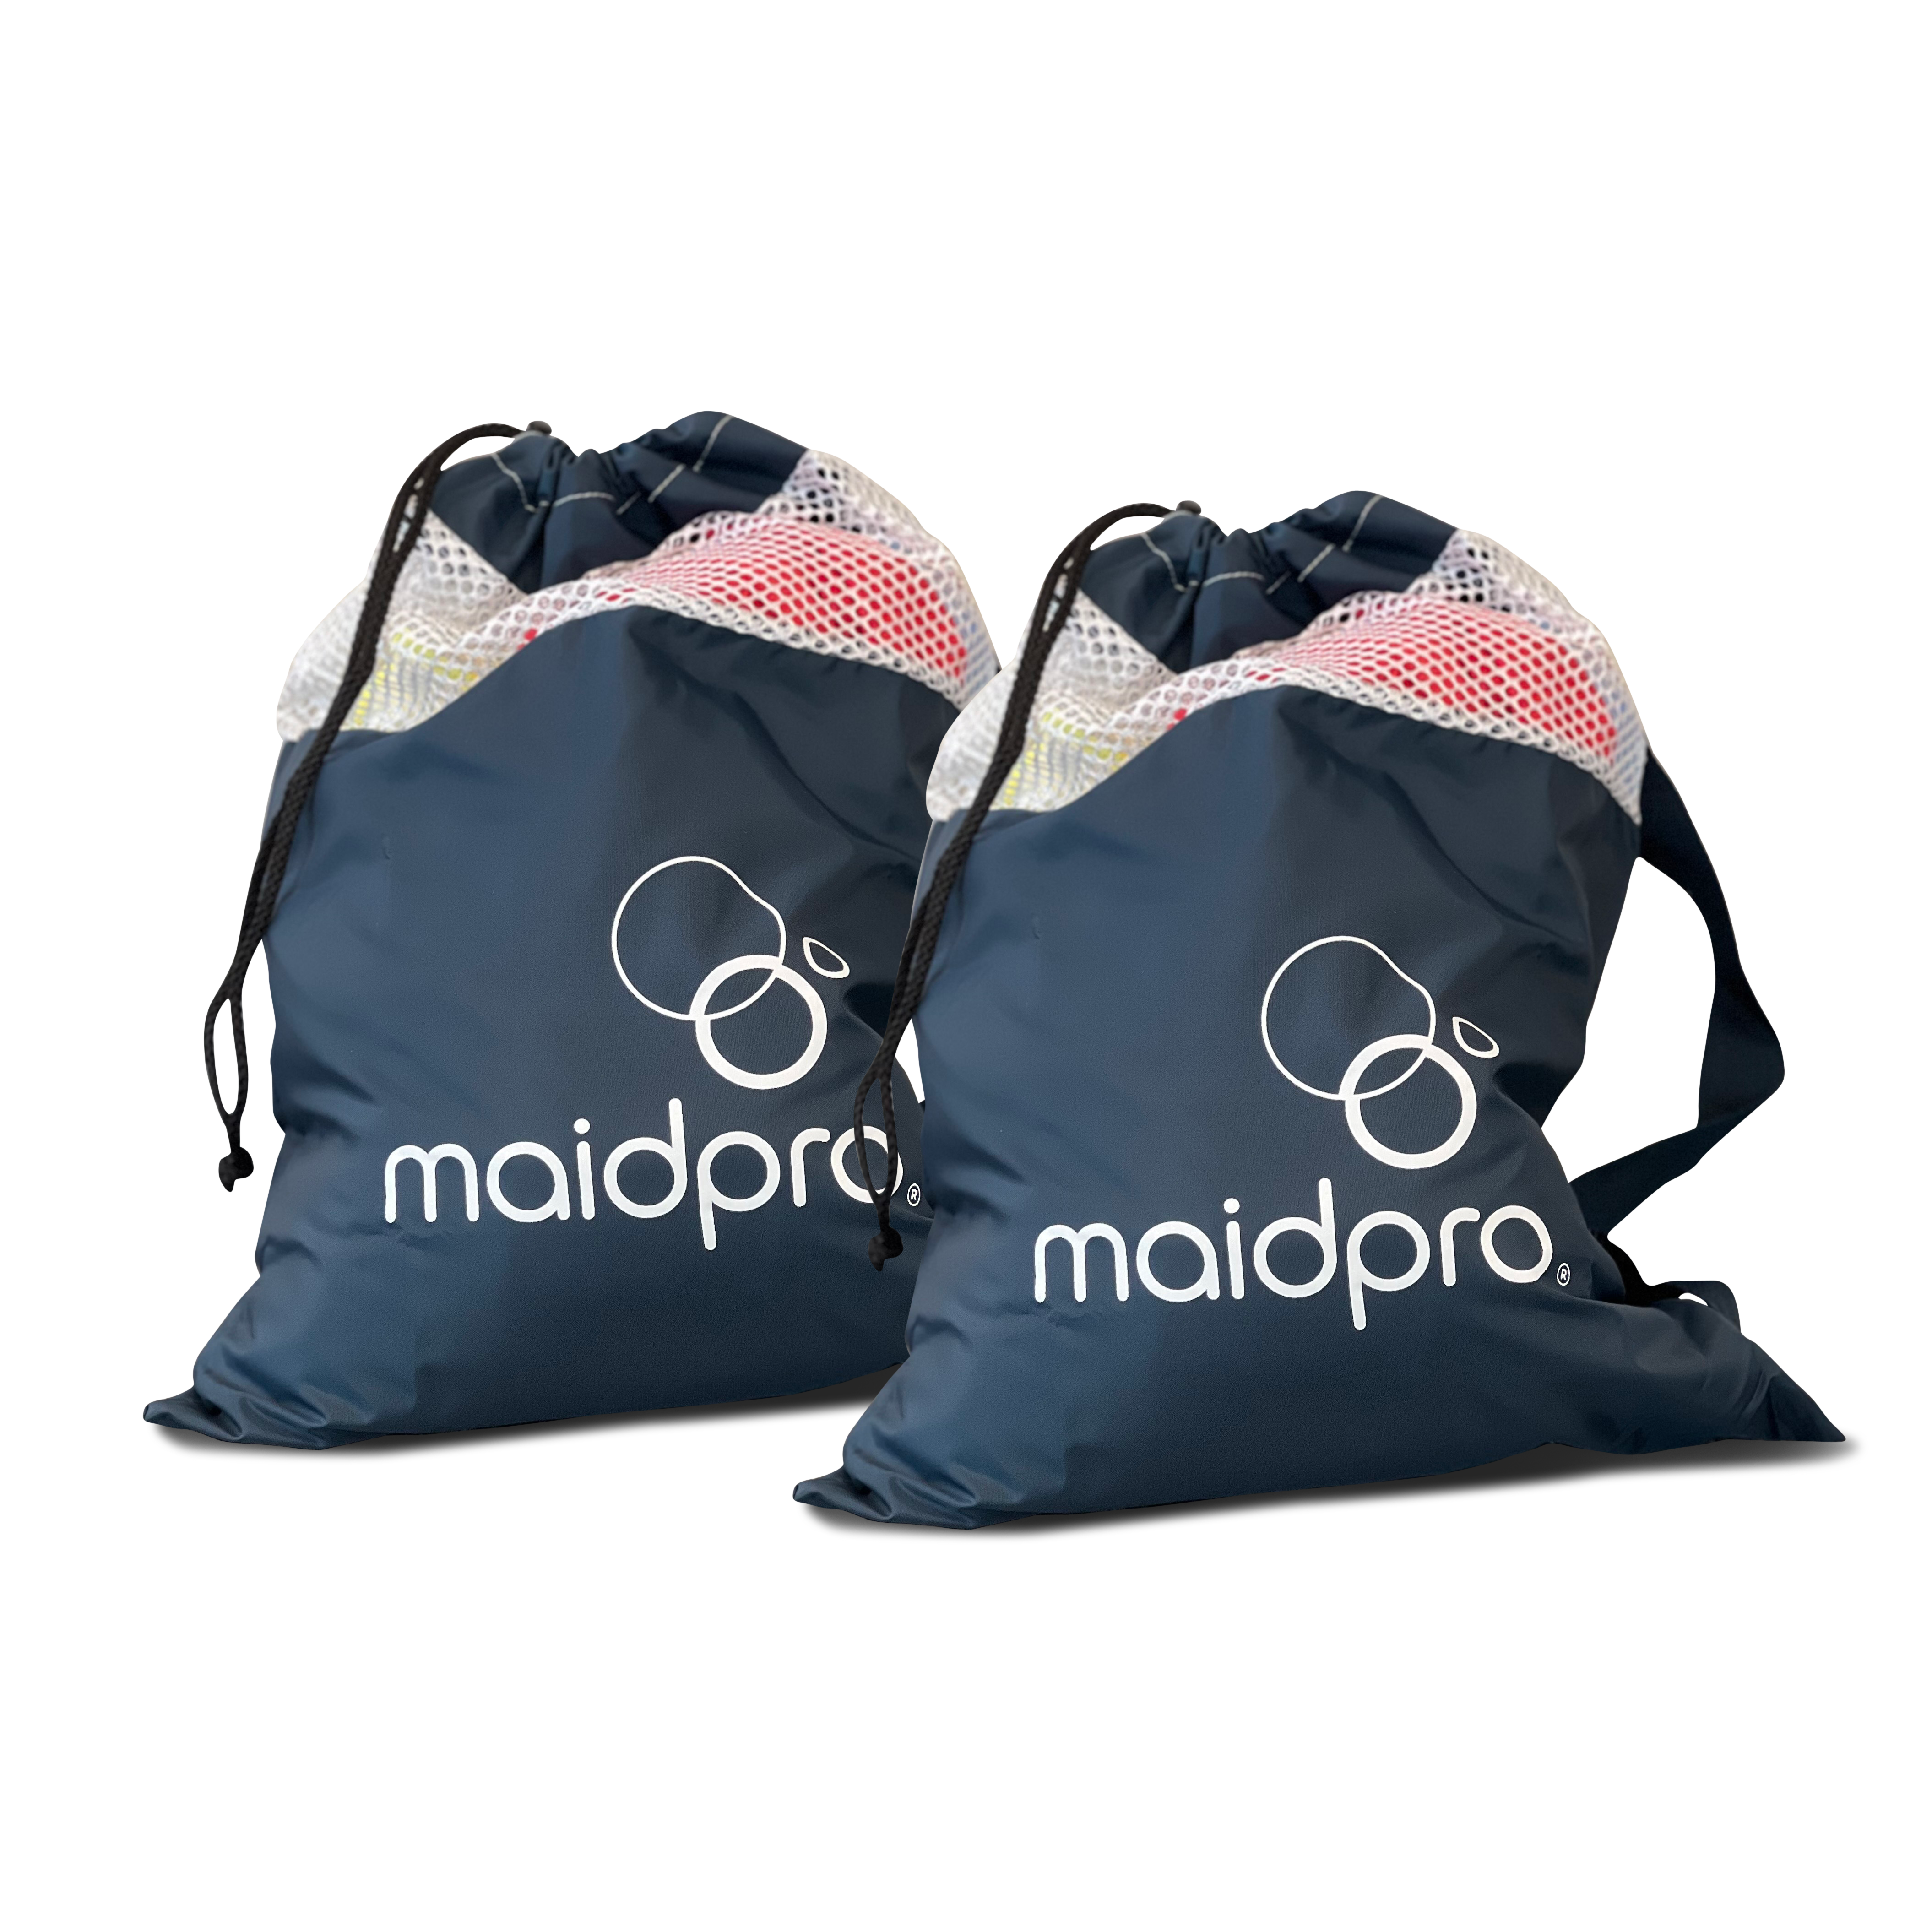 New Style - 15"x20" MaidPro Cinch Bag